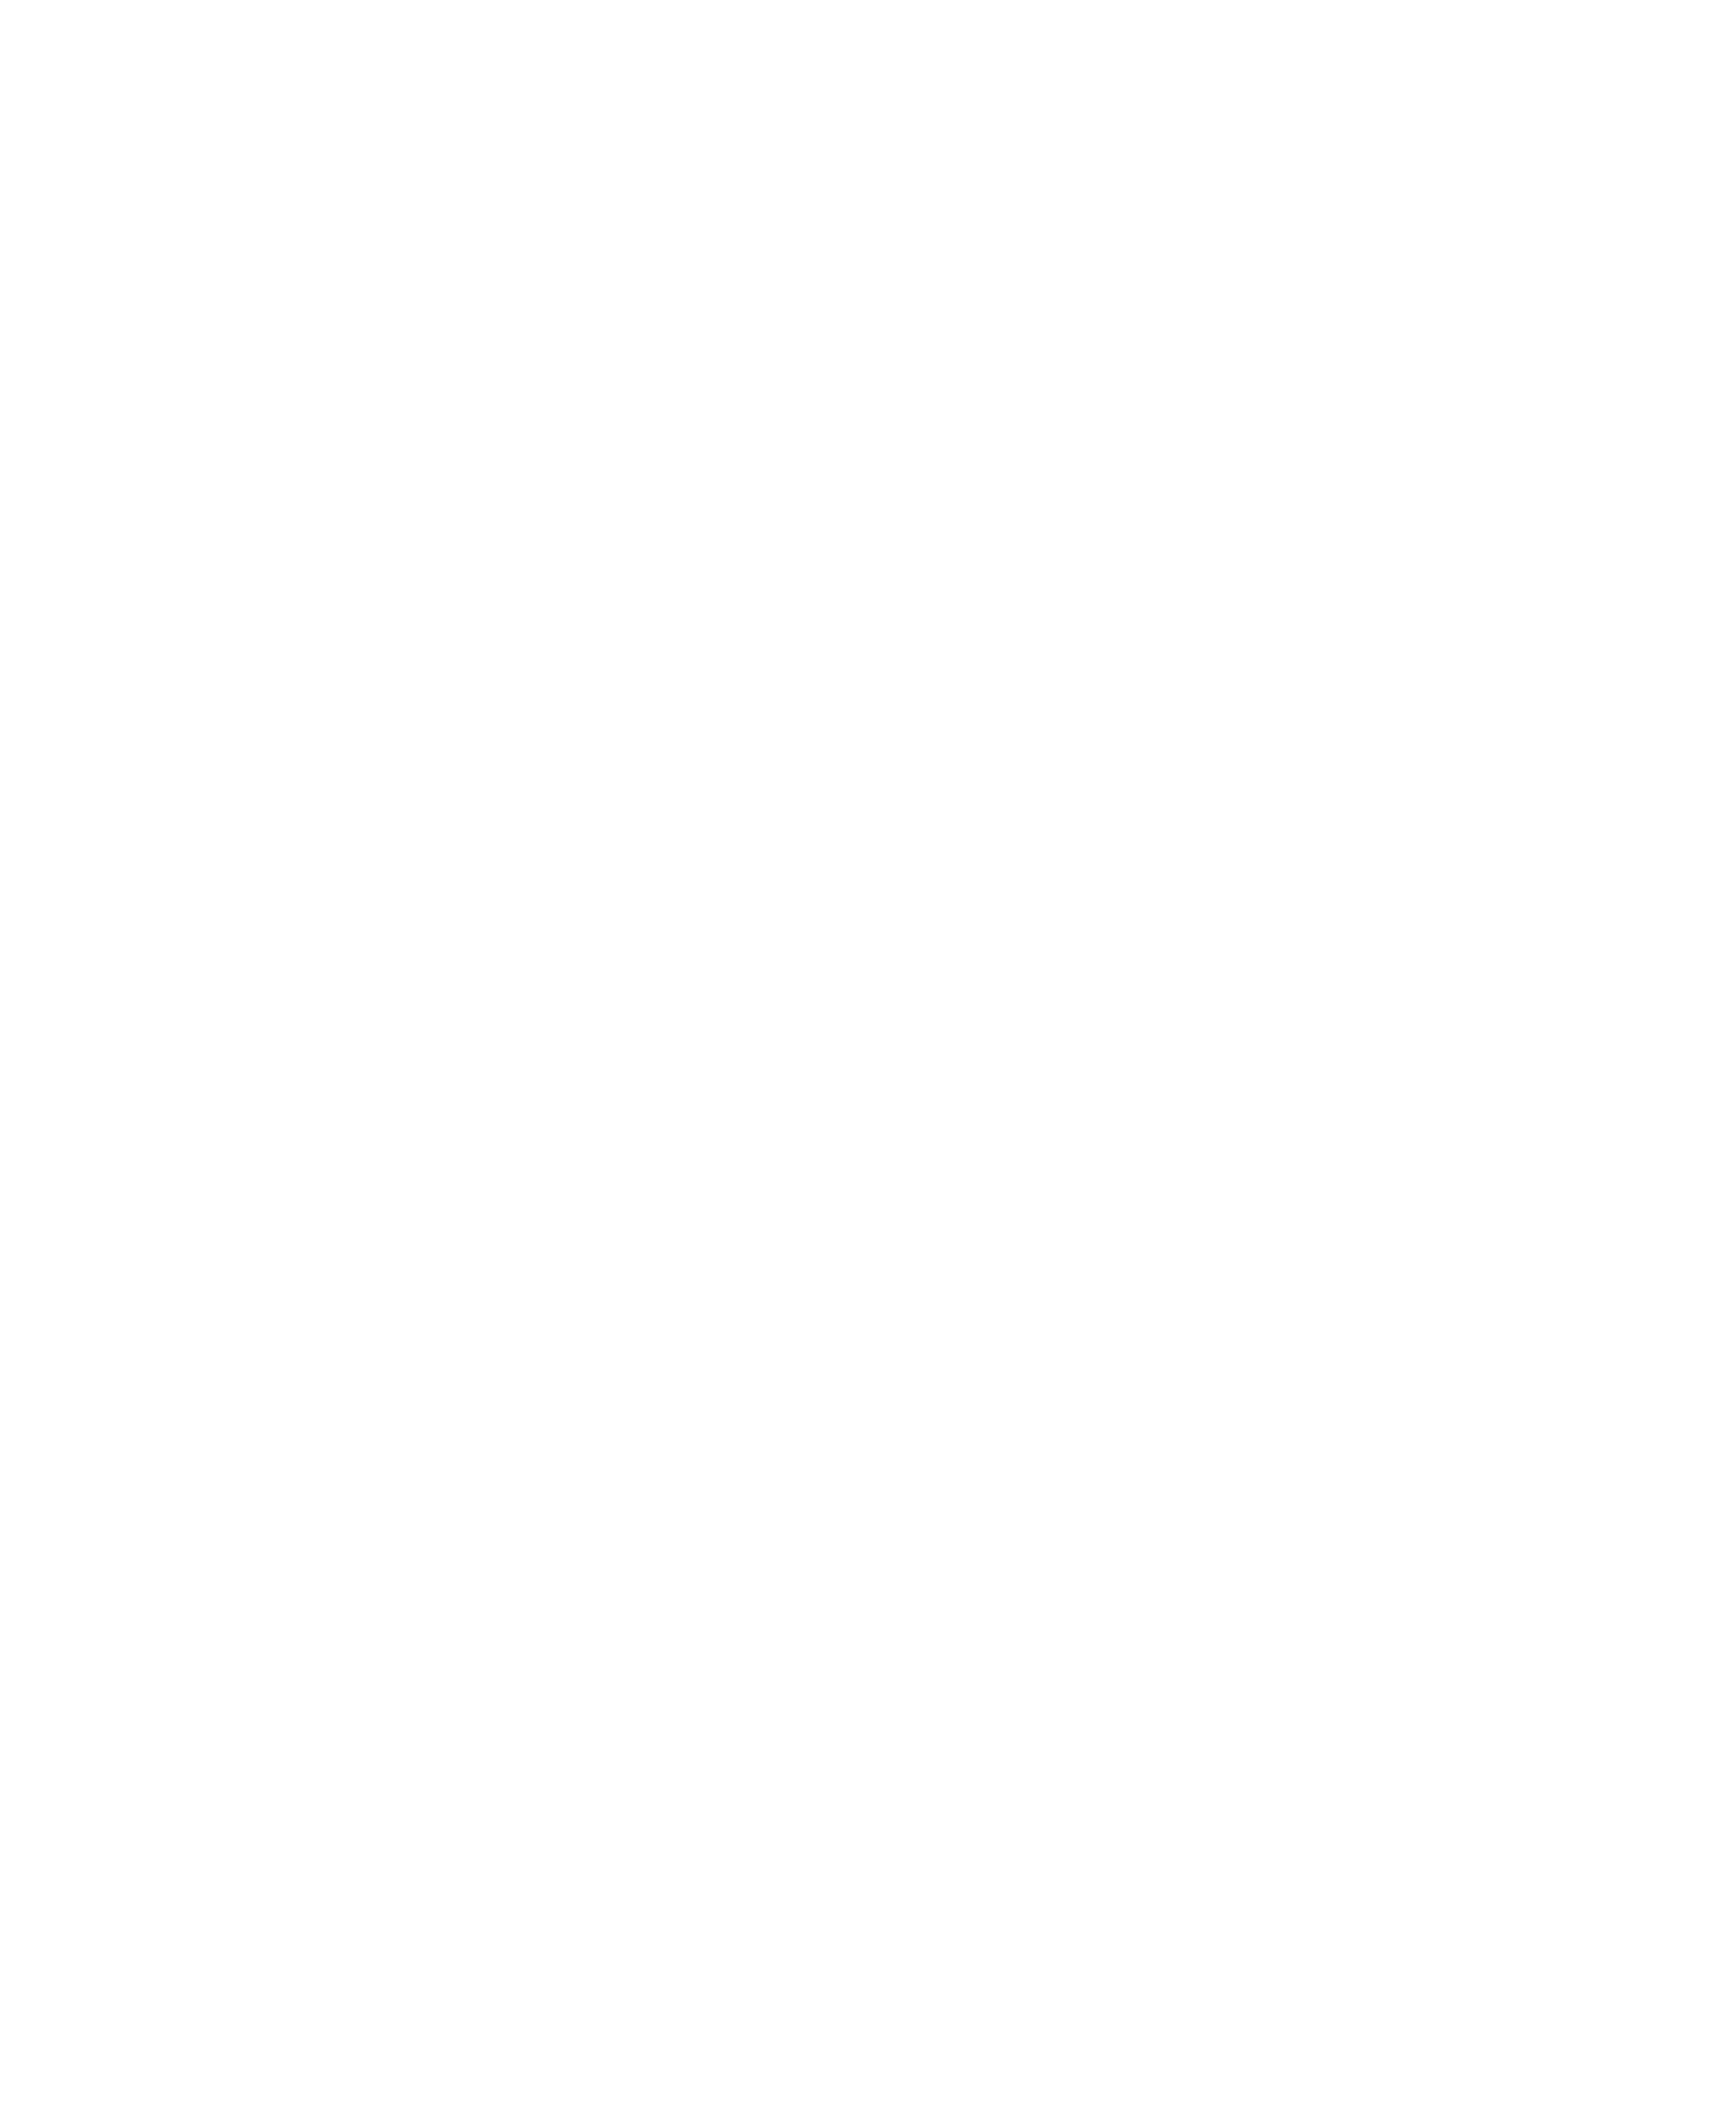 pawapi-logo-vector-02